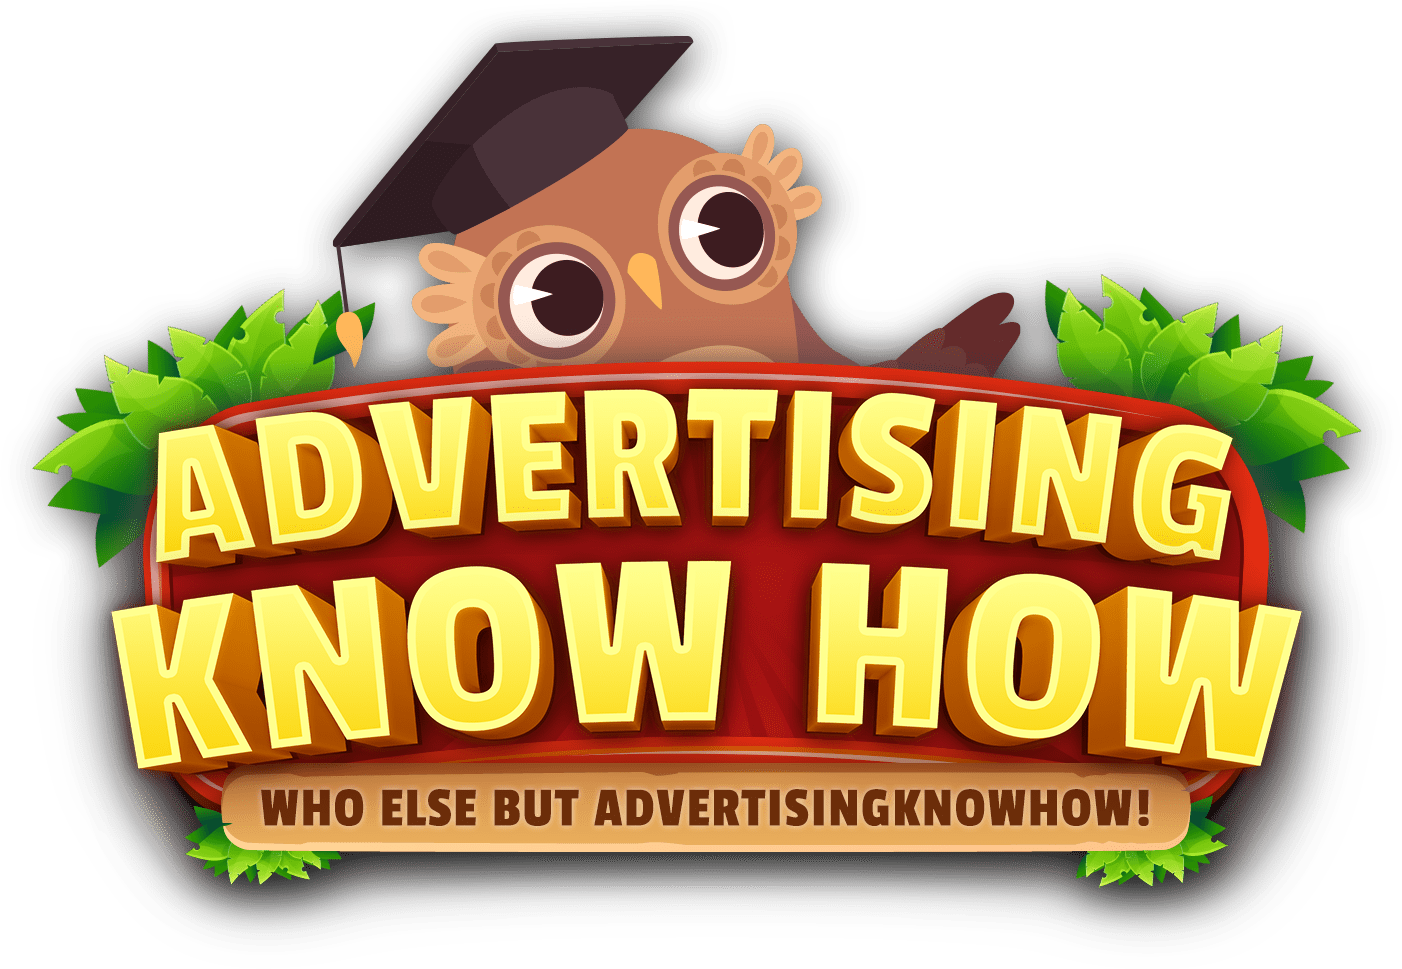 AdvertisingKnowHow Logo